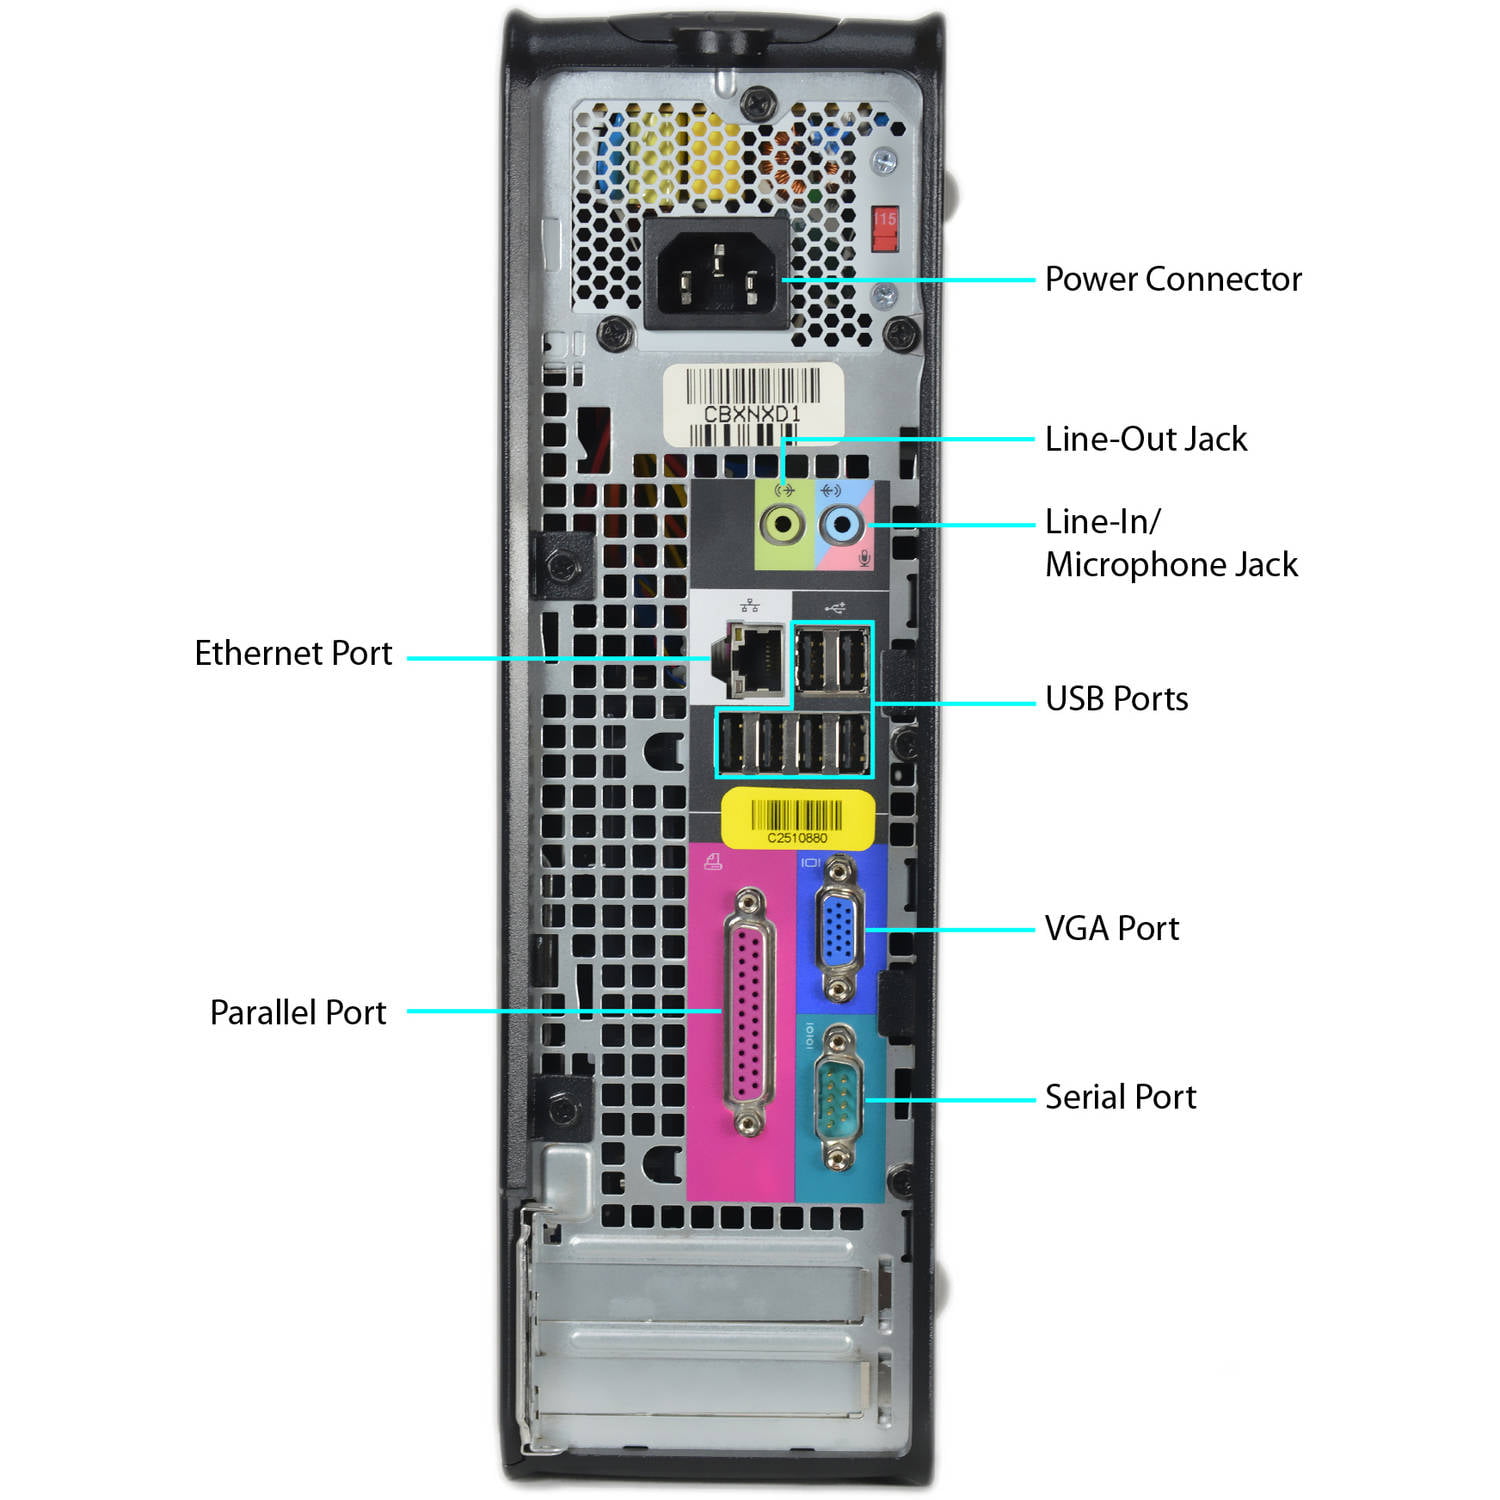 DELL OPTIPLEX 780 PCI SERIAL PORT 64BIT DRIVER